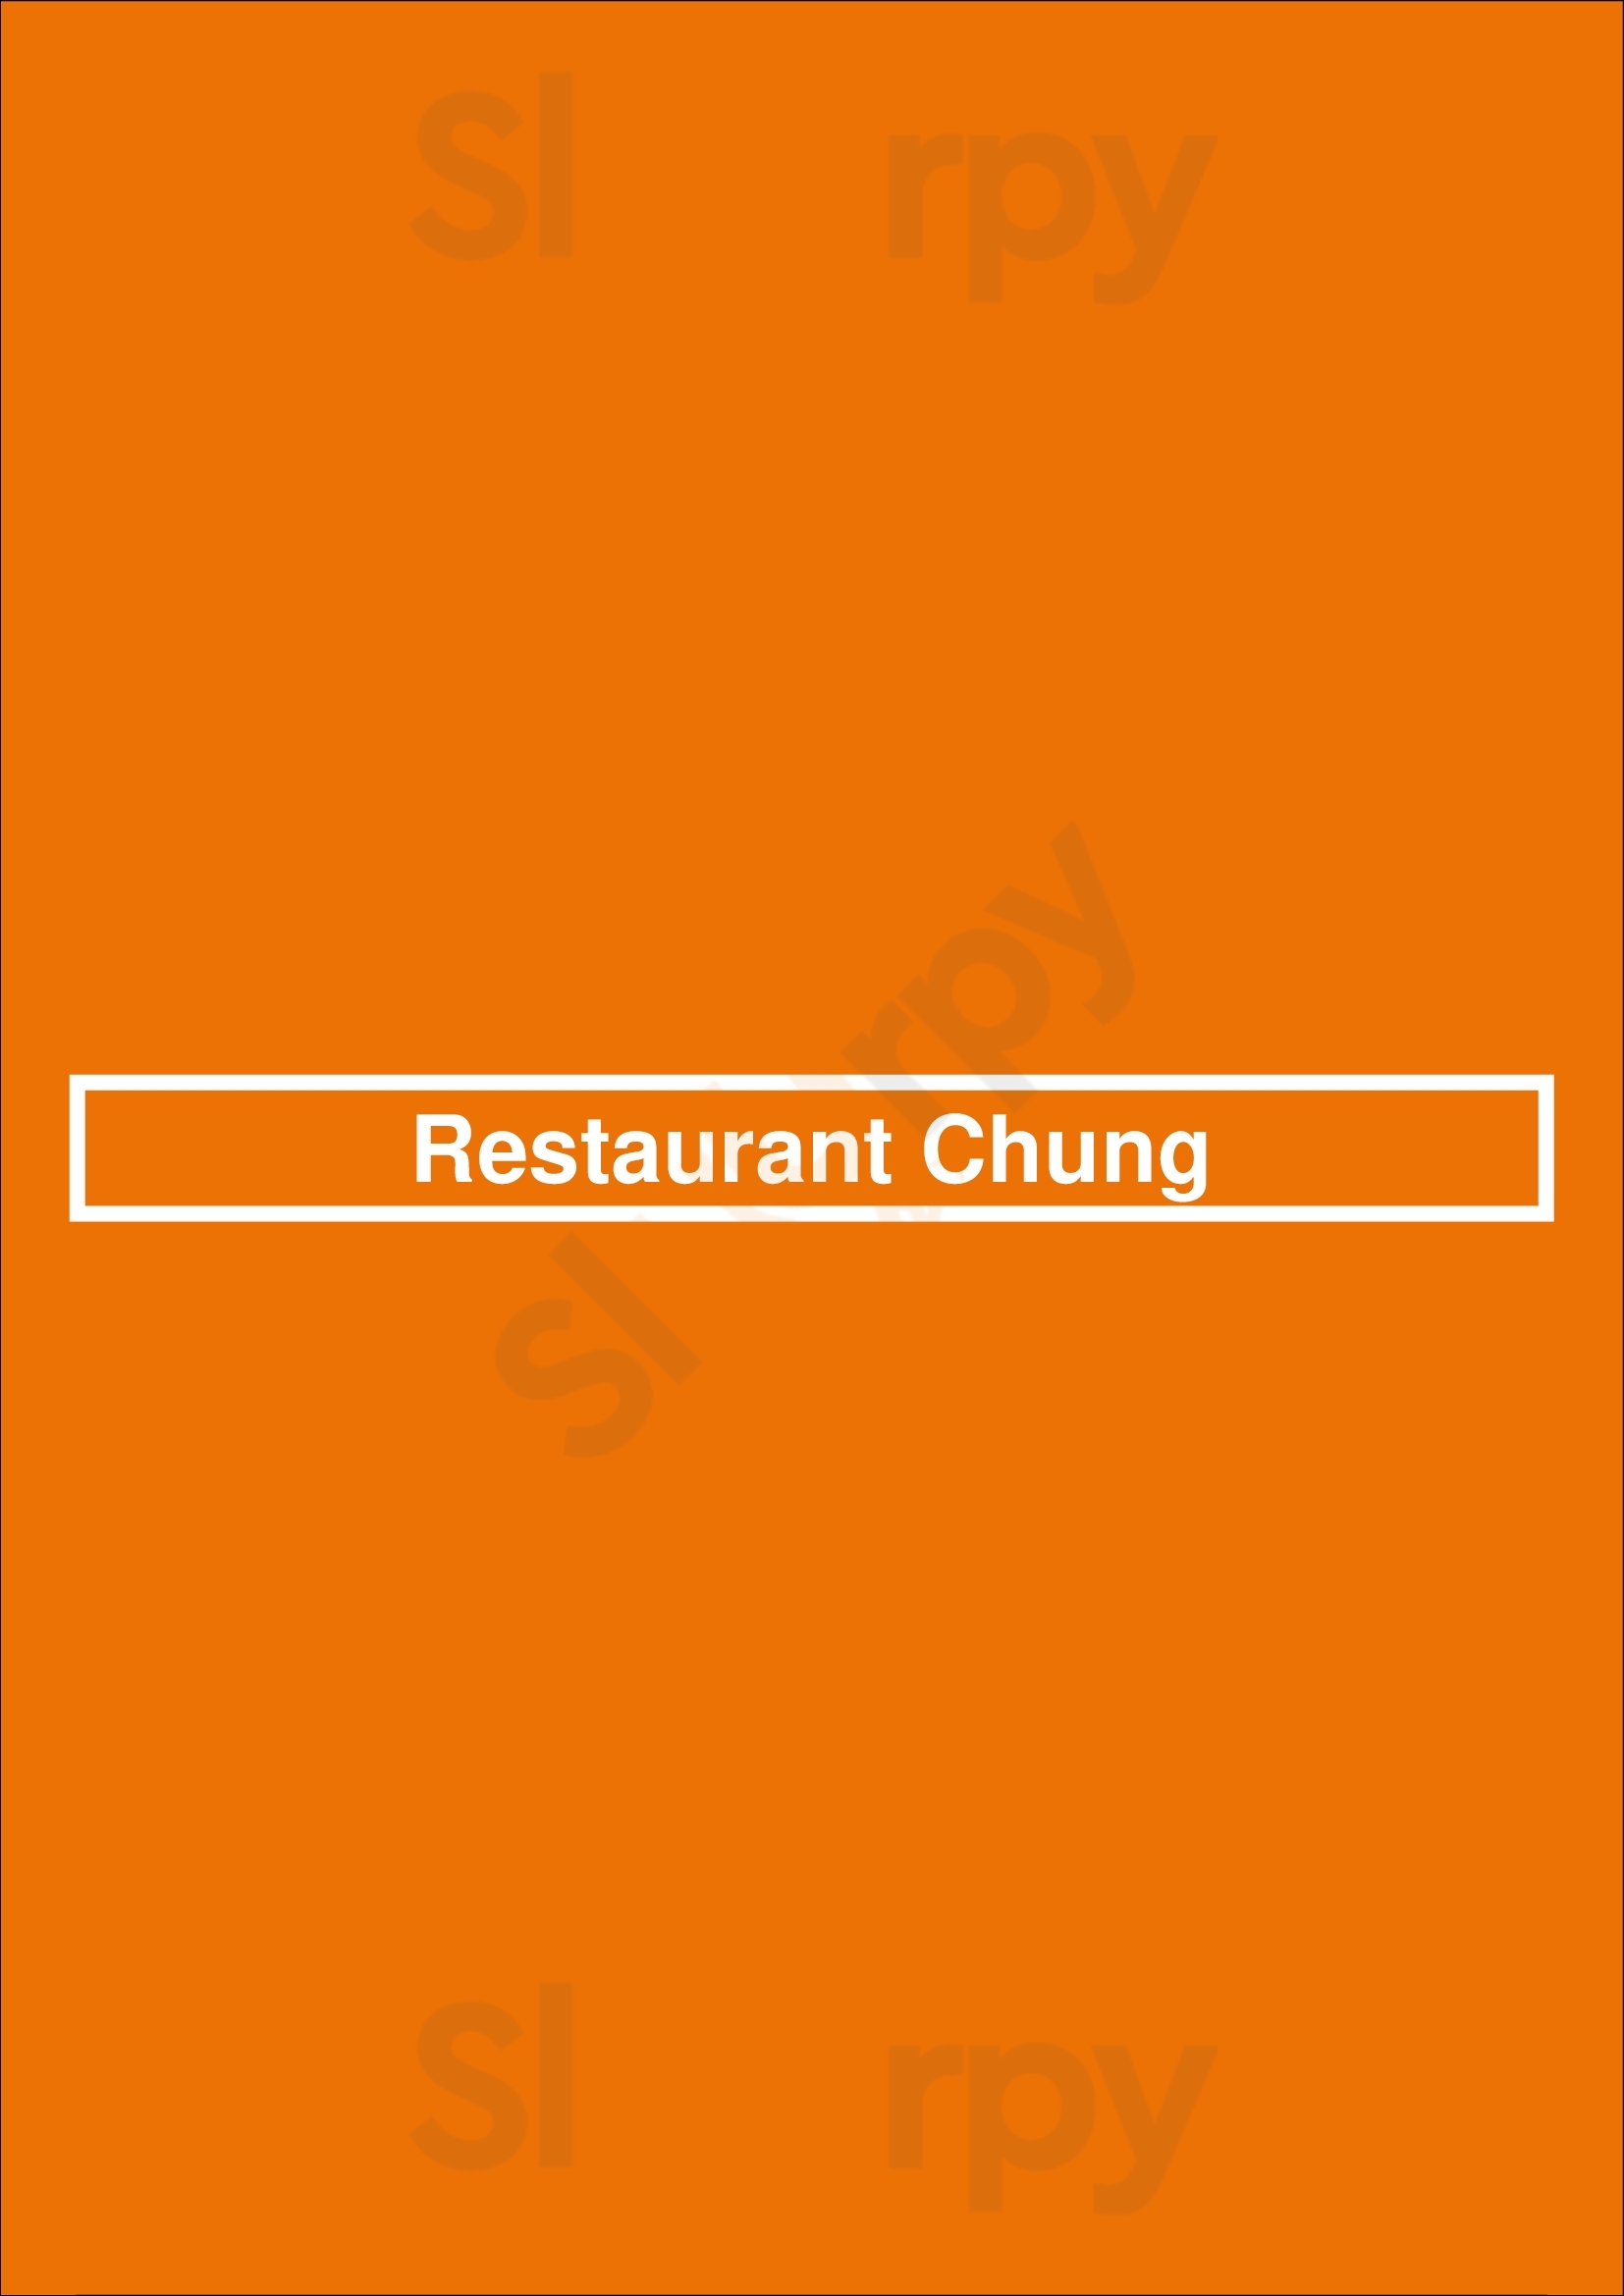 Restaurant Chung Rotterdam Menu - 1